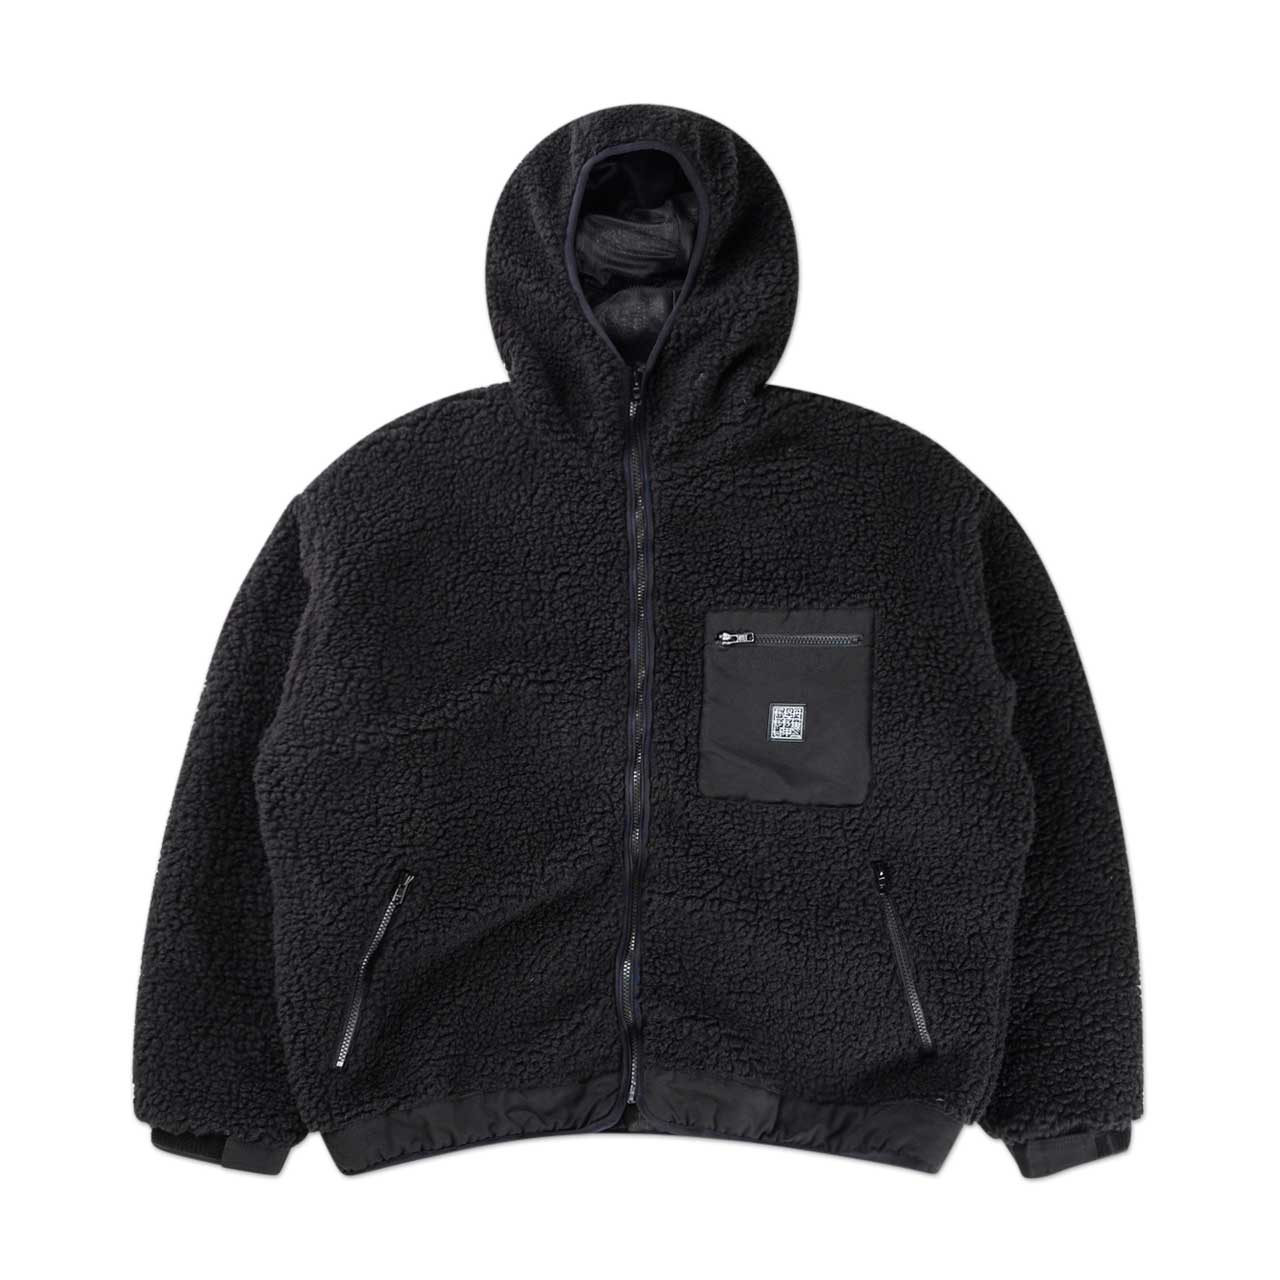 flagstuff f/z over hoodie jacket (black) - 19aw-spot-fs-01 - a.plus - Image - 1